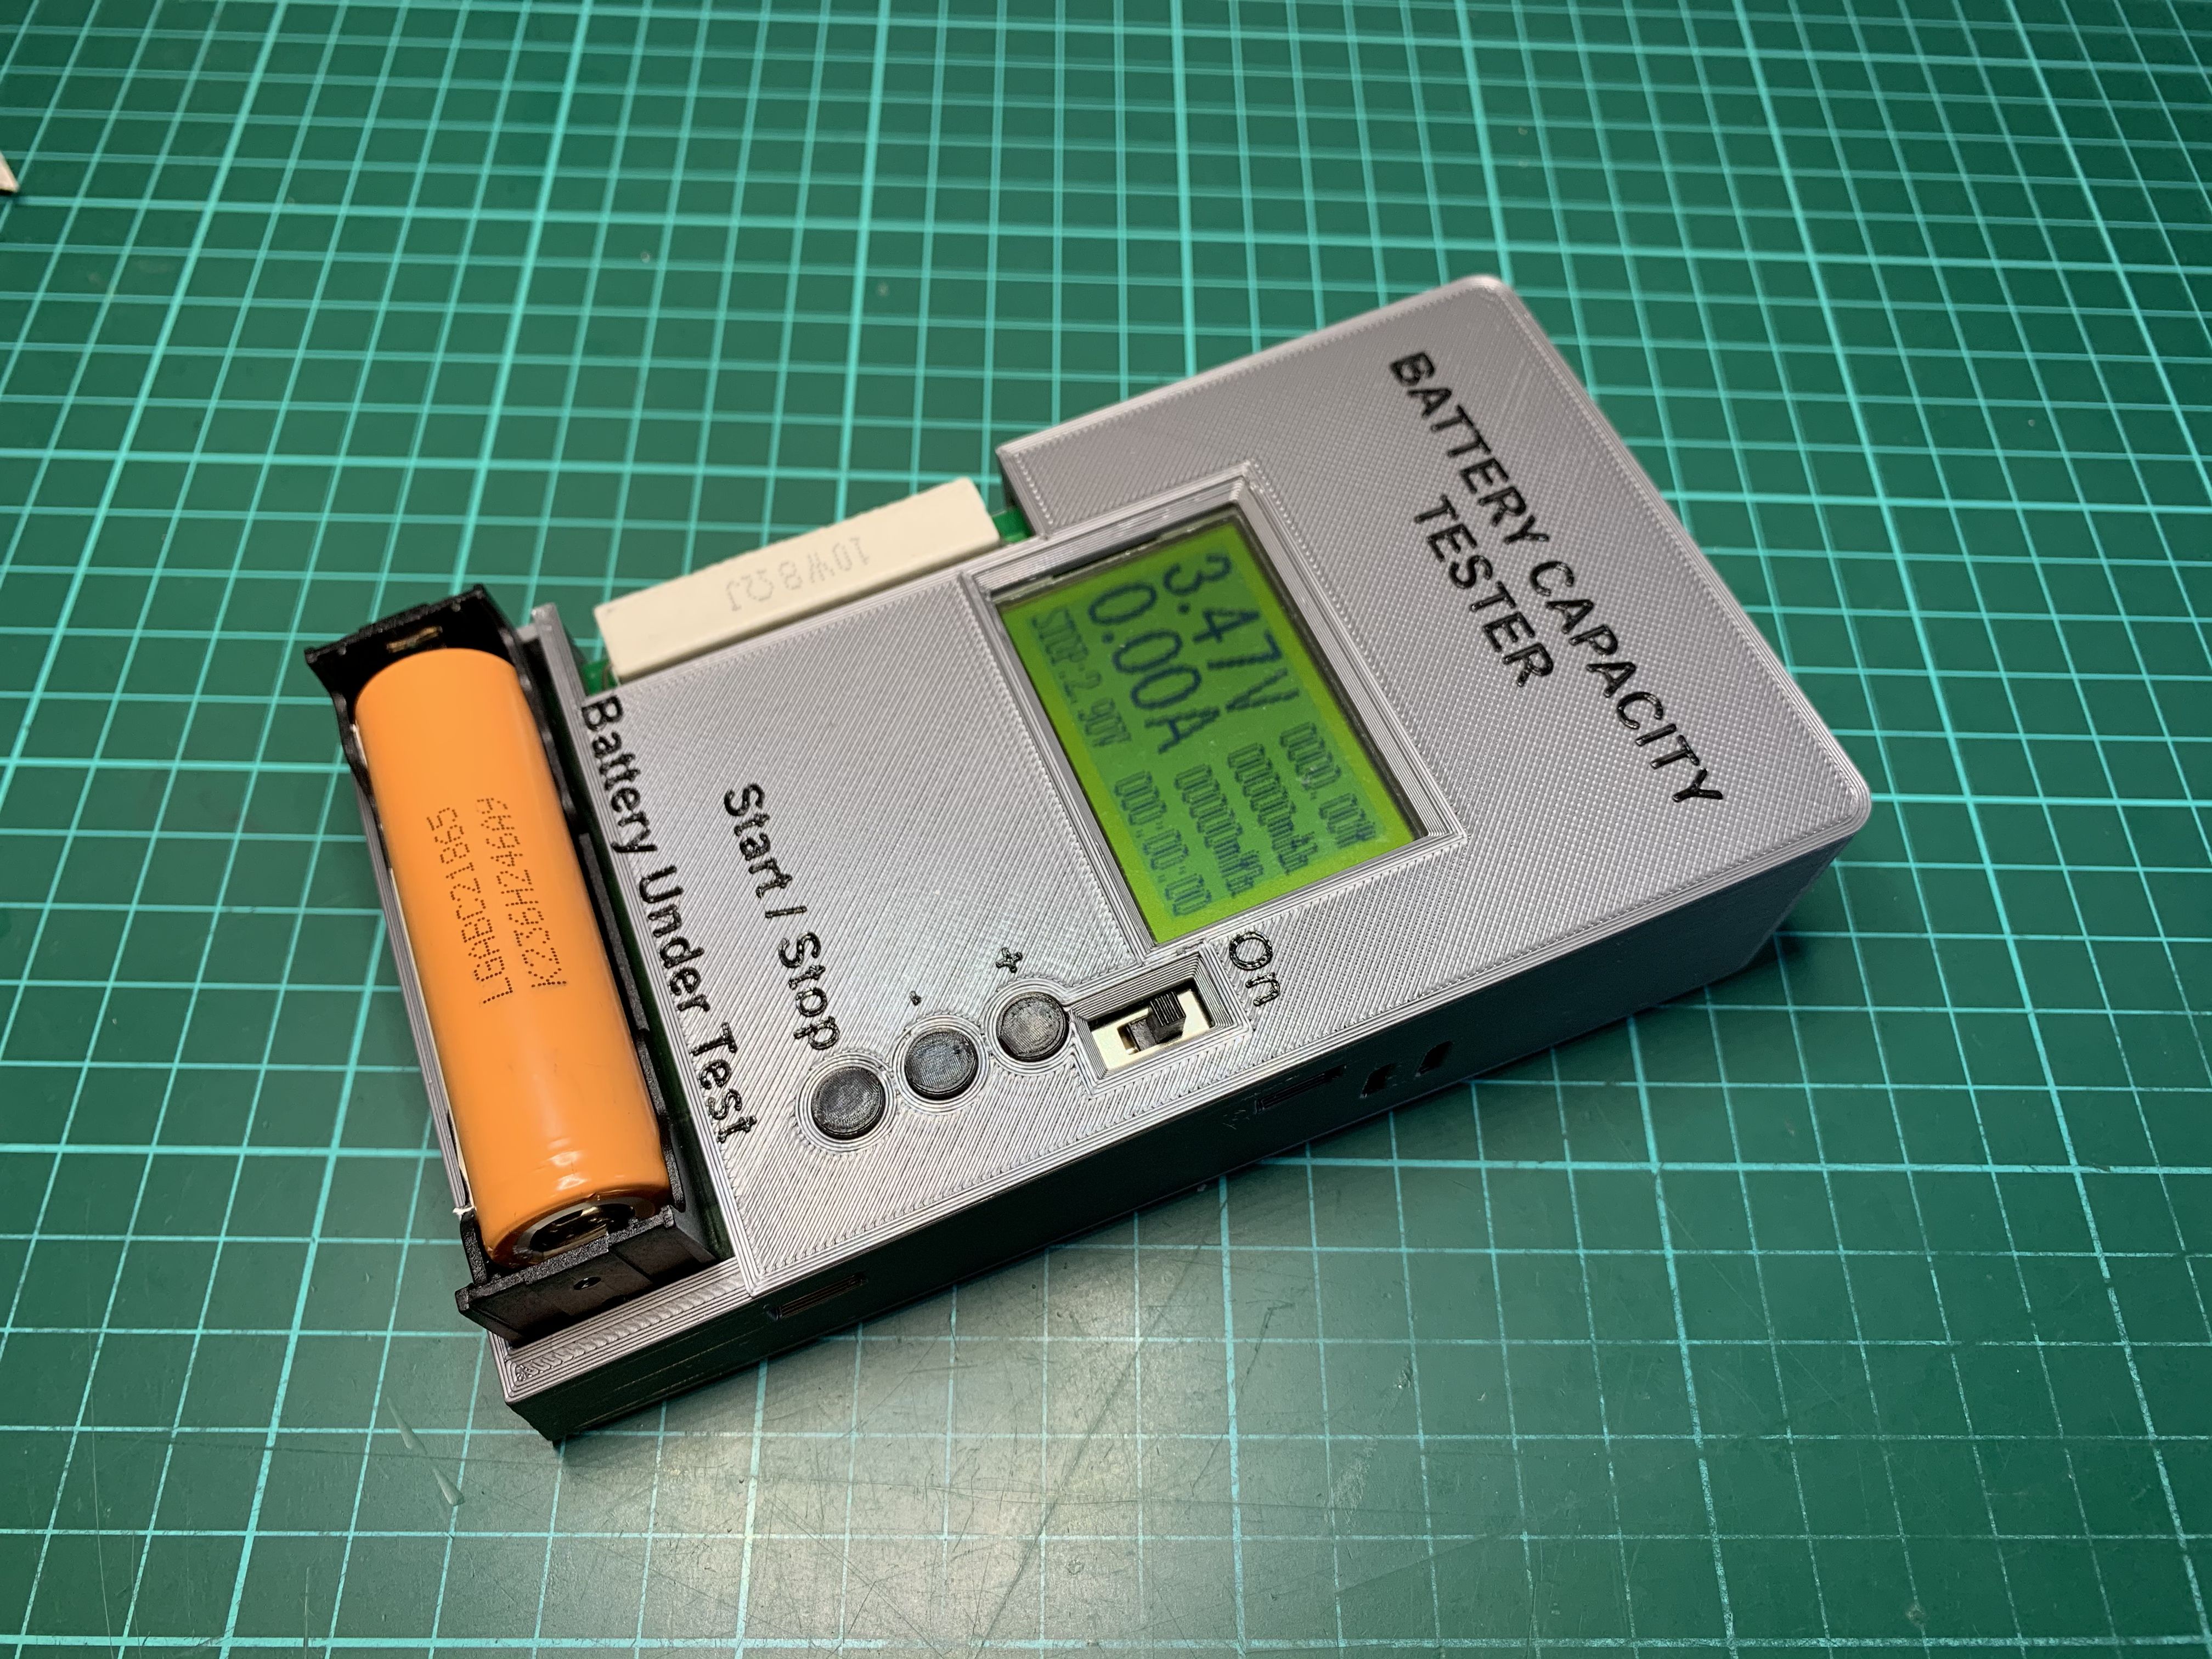 Battery Capacity Tester Case